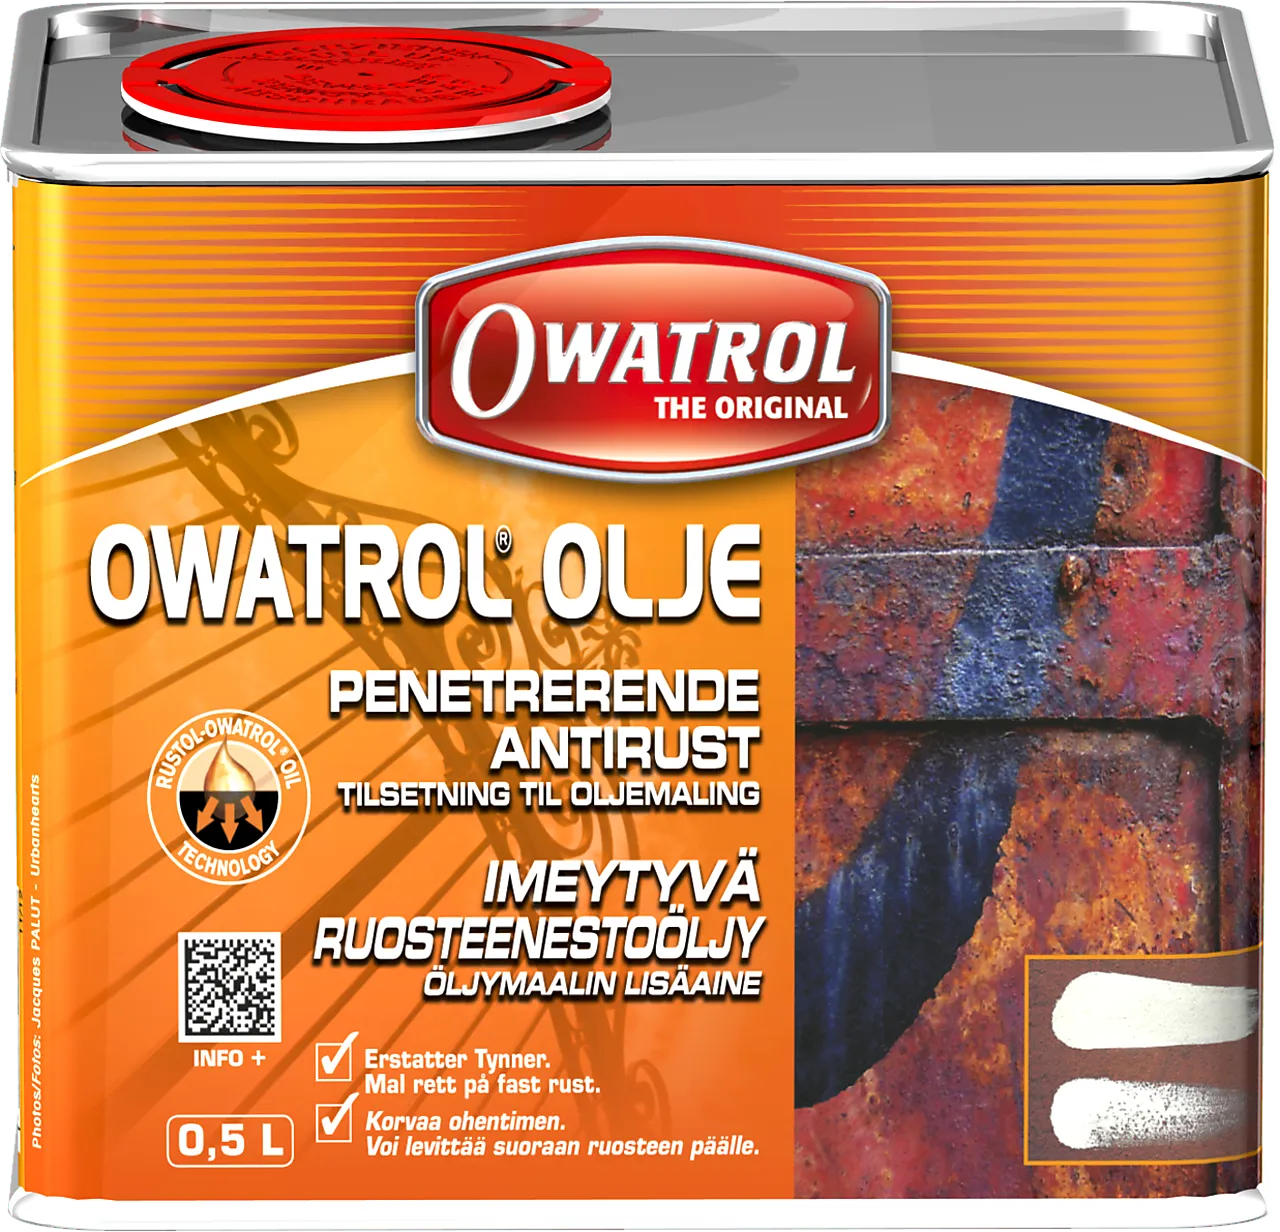 Owatrol olje 0,5 liter null - null - 1